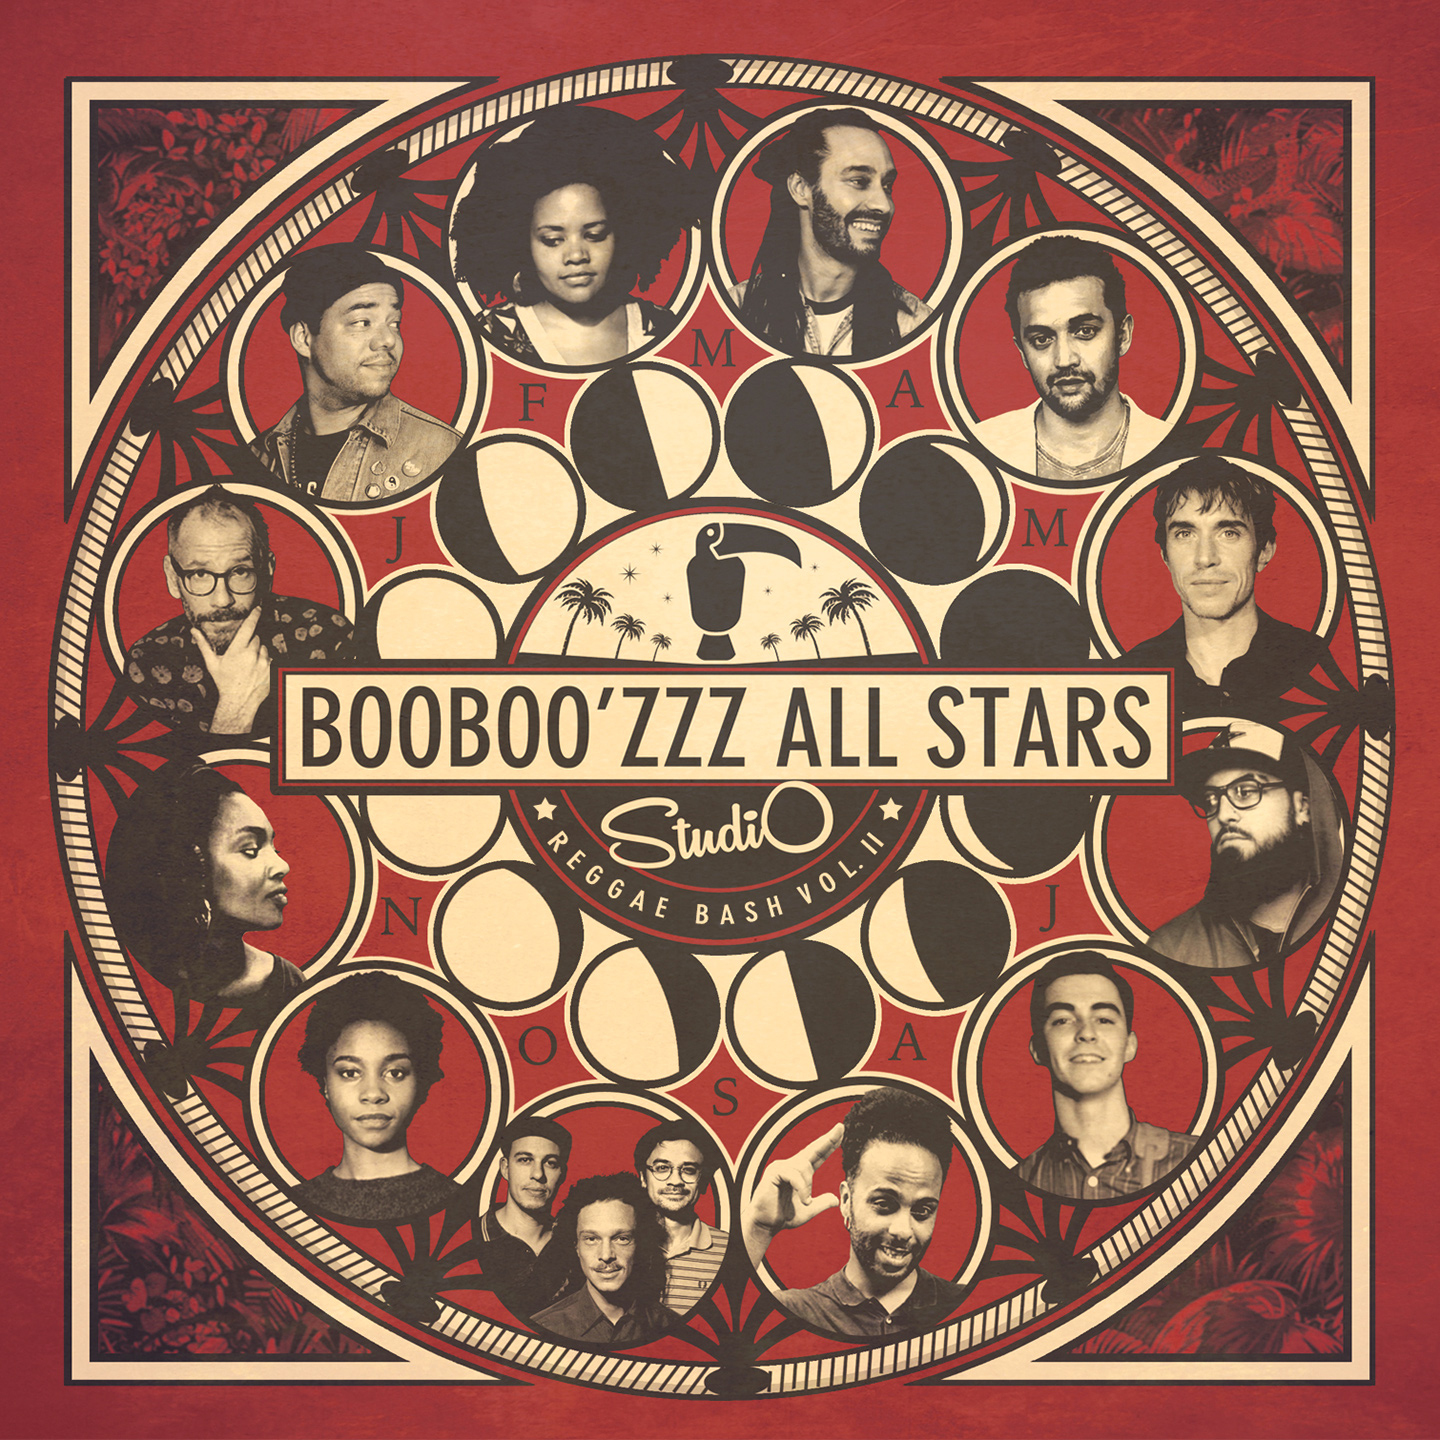 photo chronique Reggae album Studio Reggae Bash 2 de Booboozzz All Stars